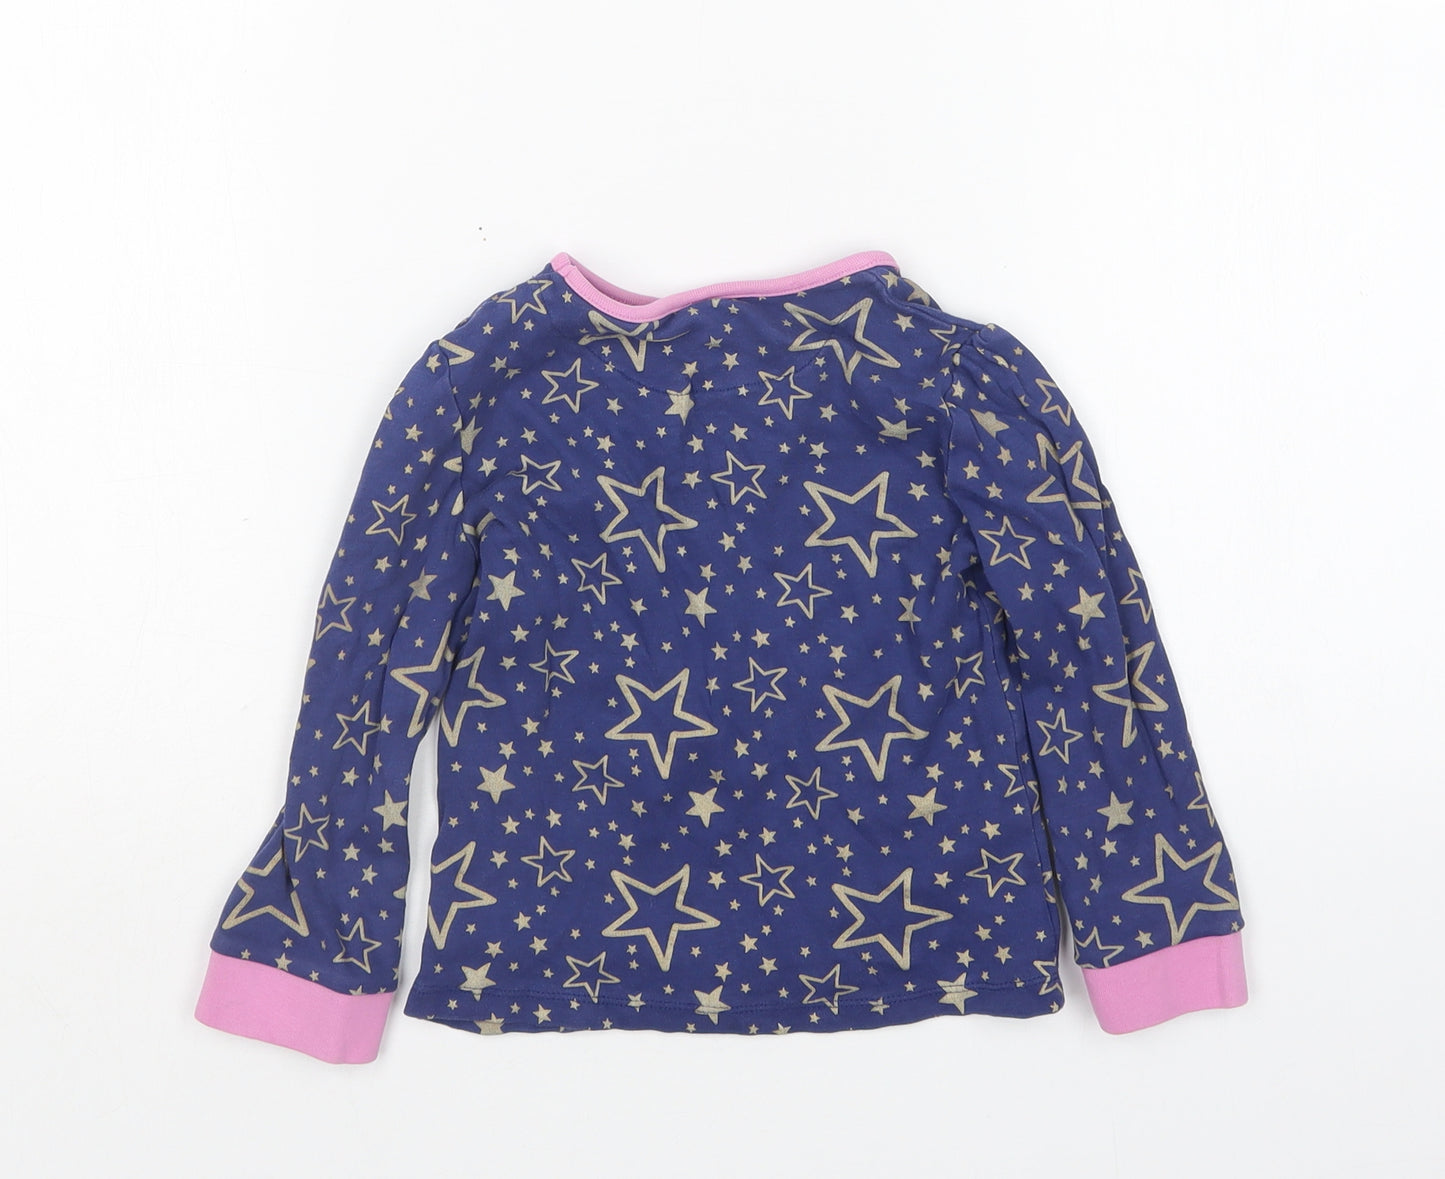 Mini Club Girls Multicoloured Polka Dot Cotton Top Pyjama Top Size 3-4 Years